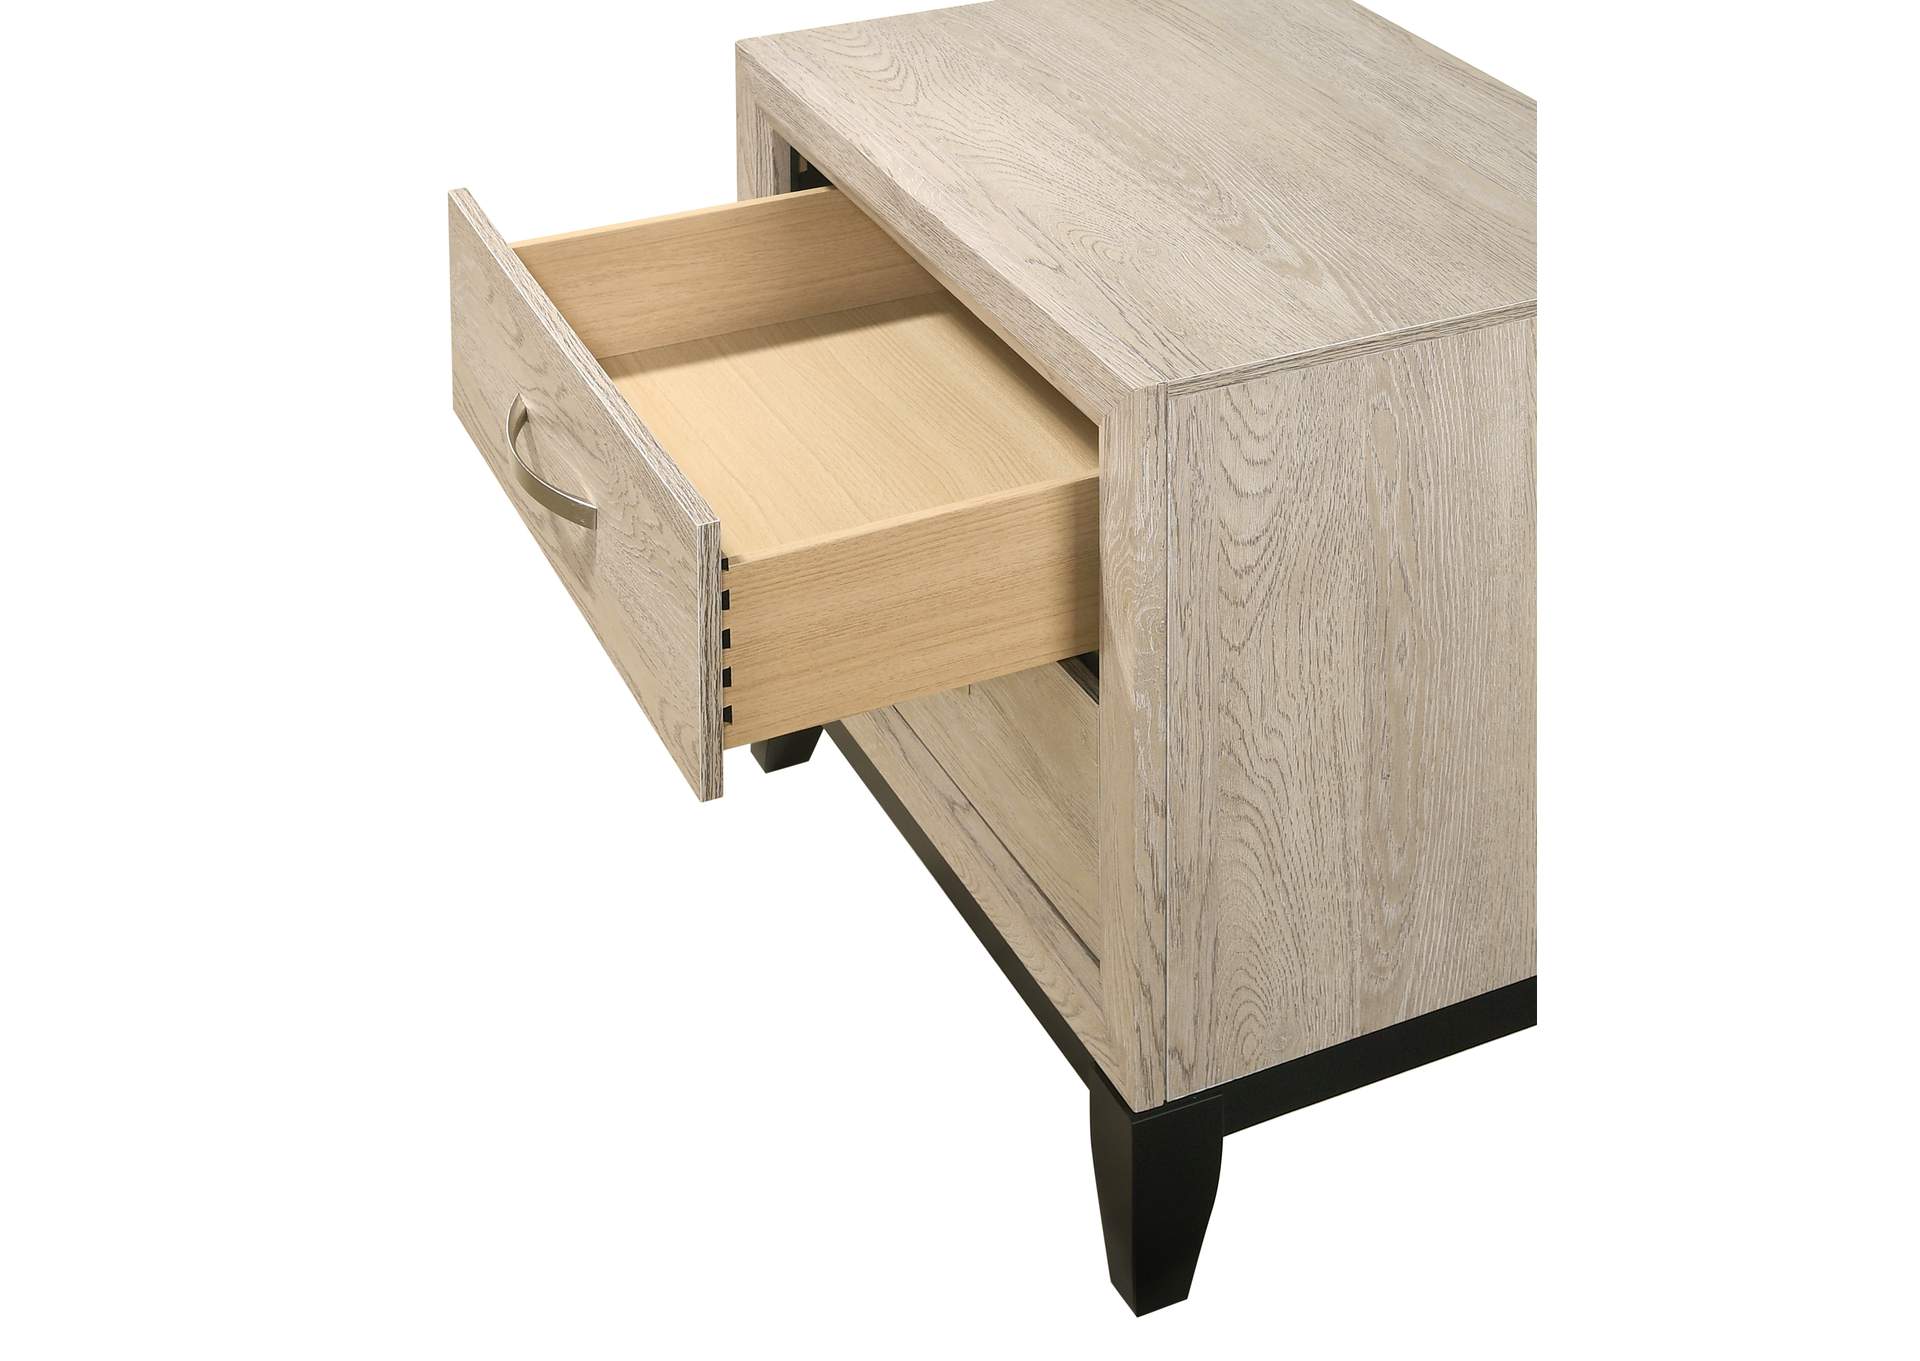 Akerson Drift Wood King Bed W/ Dresser, Mirror, Nightstand,Crown Mark